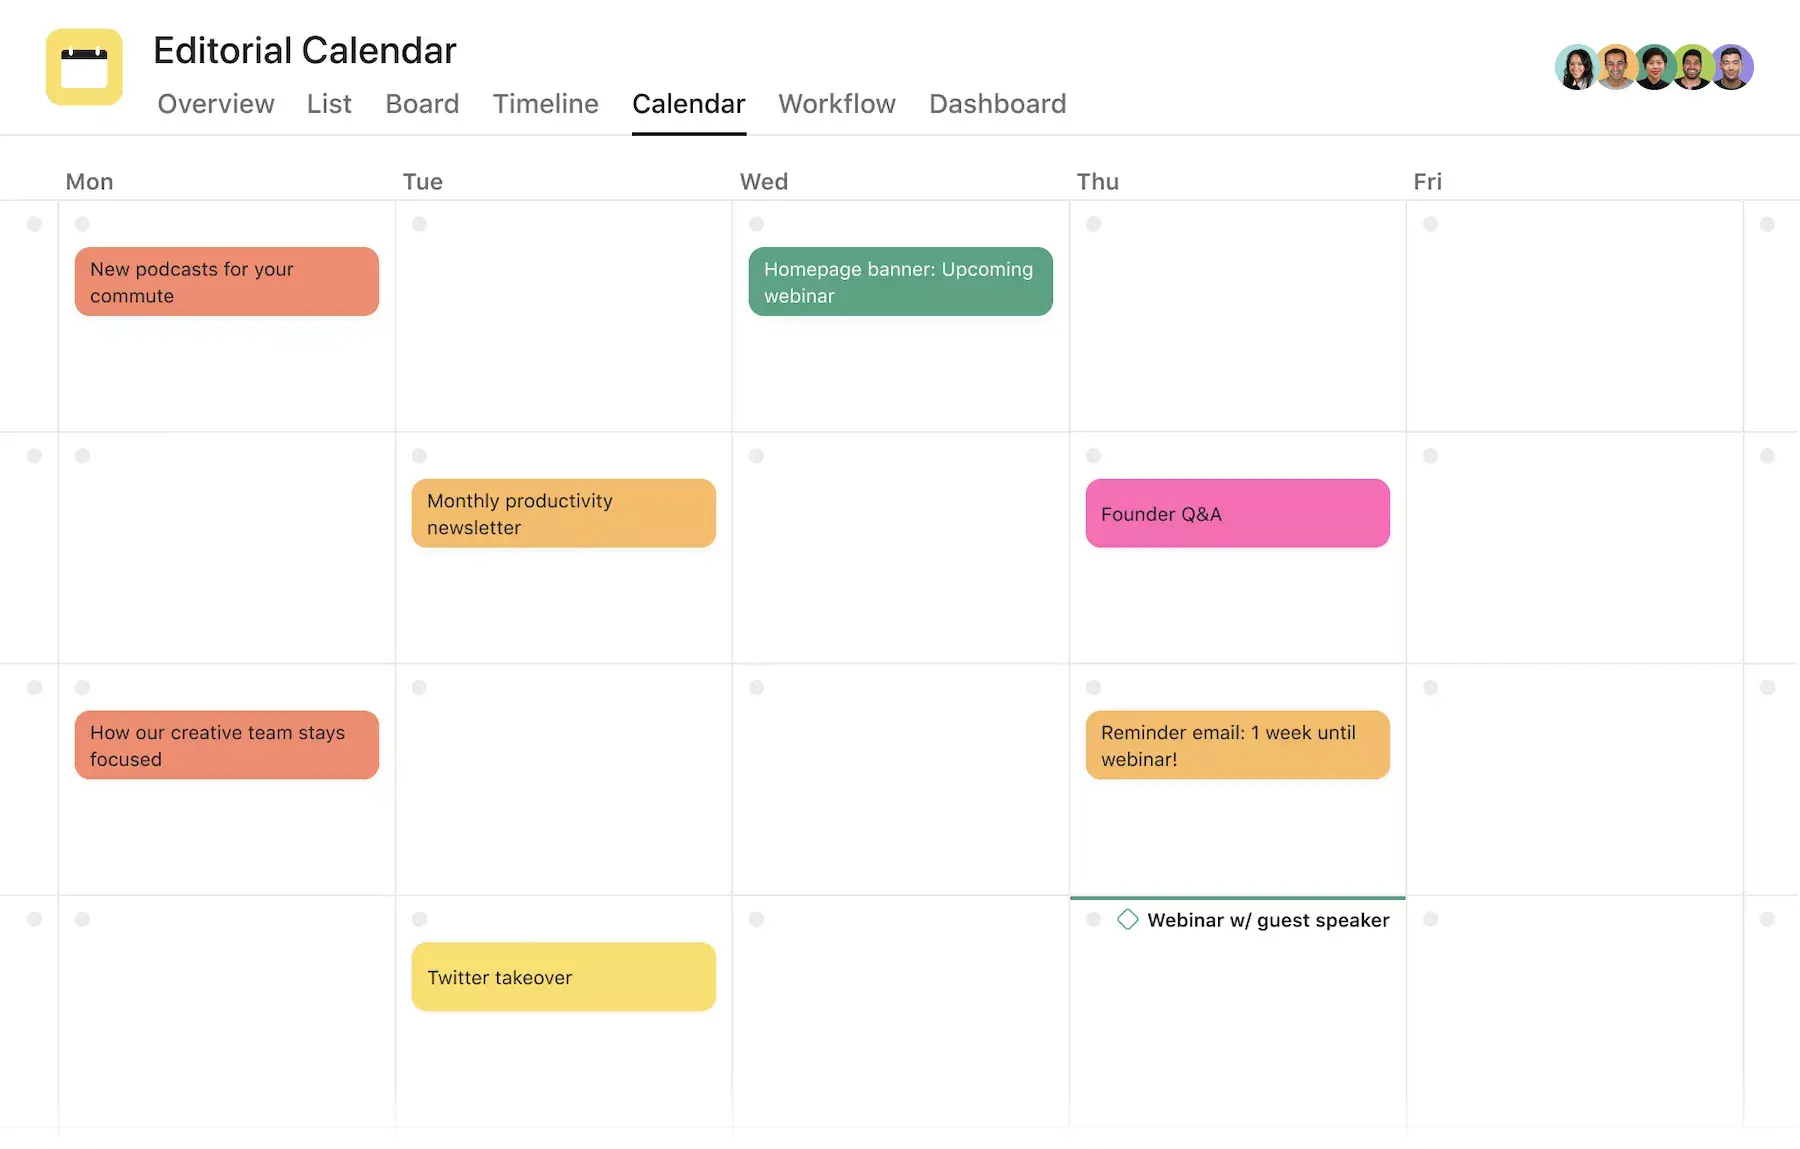 [Product UI] Editorial calendar project in Asana (Calendar View)